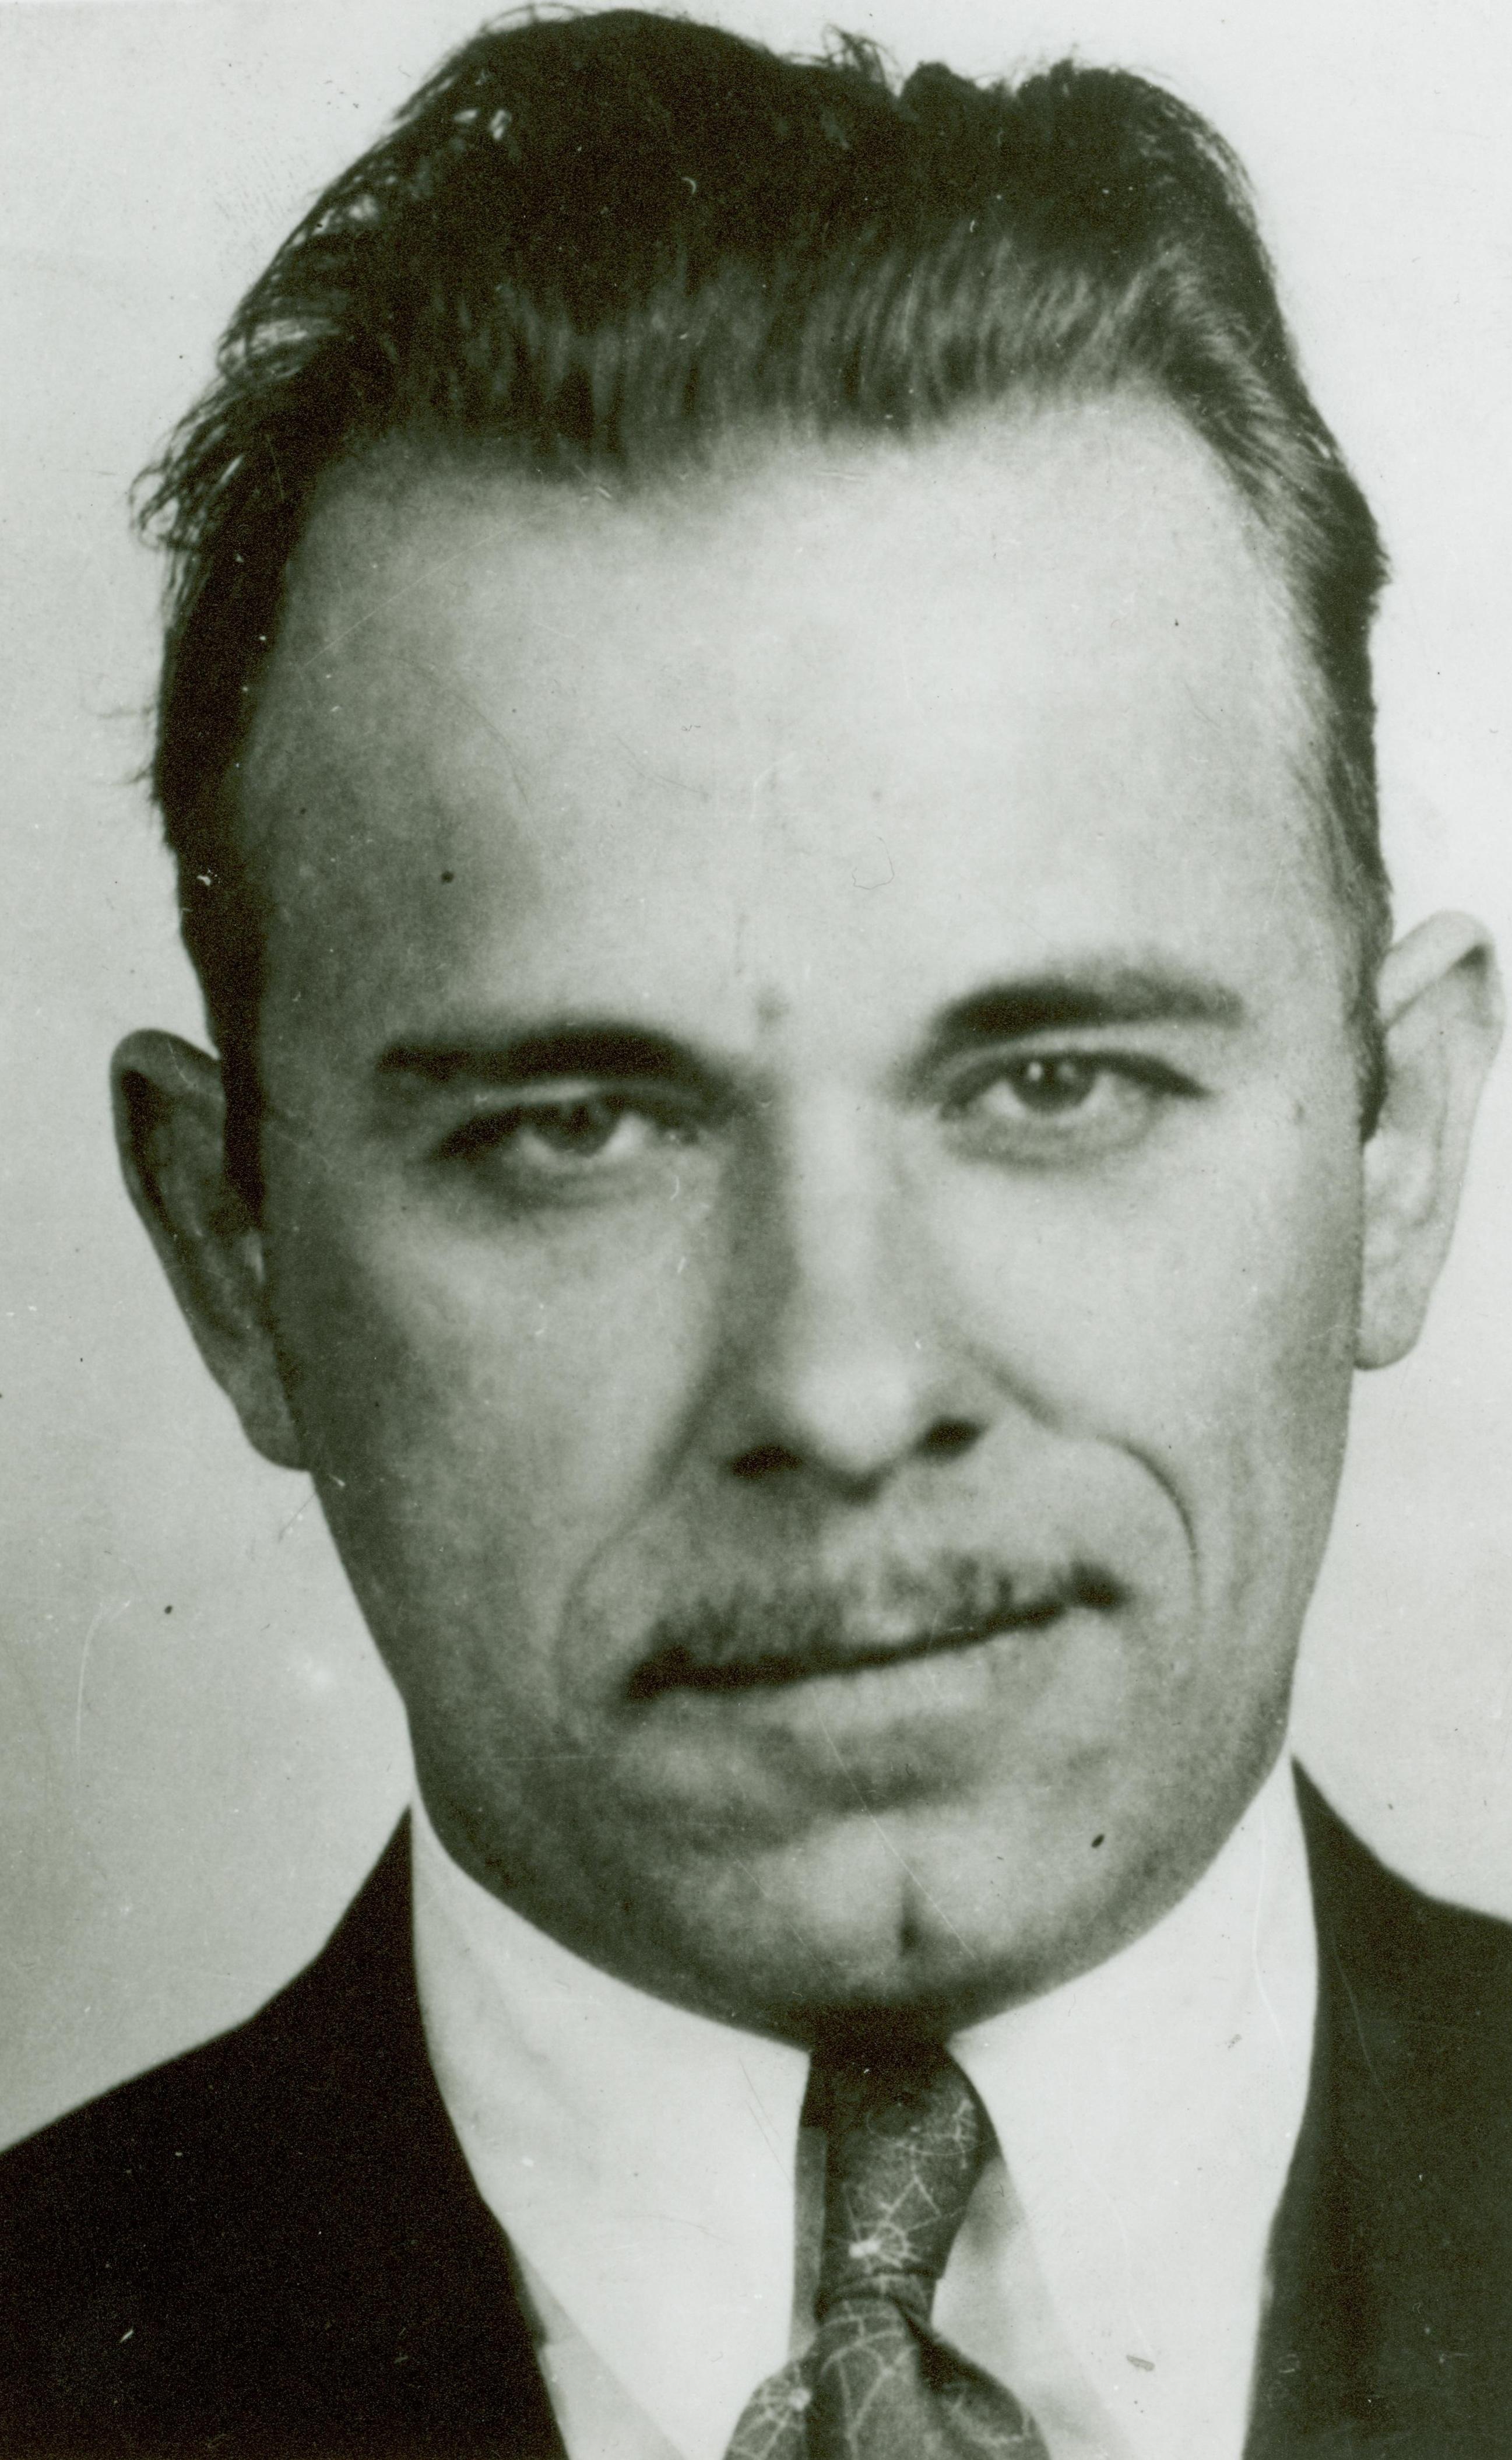 John Dillinger in the 1930s